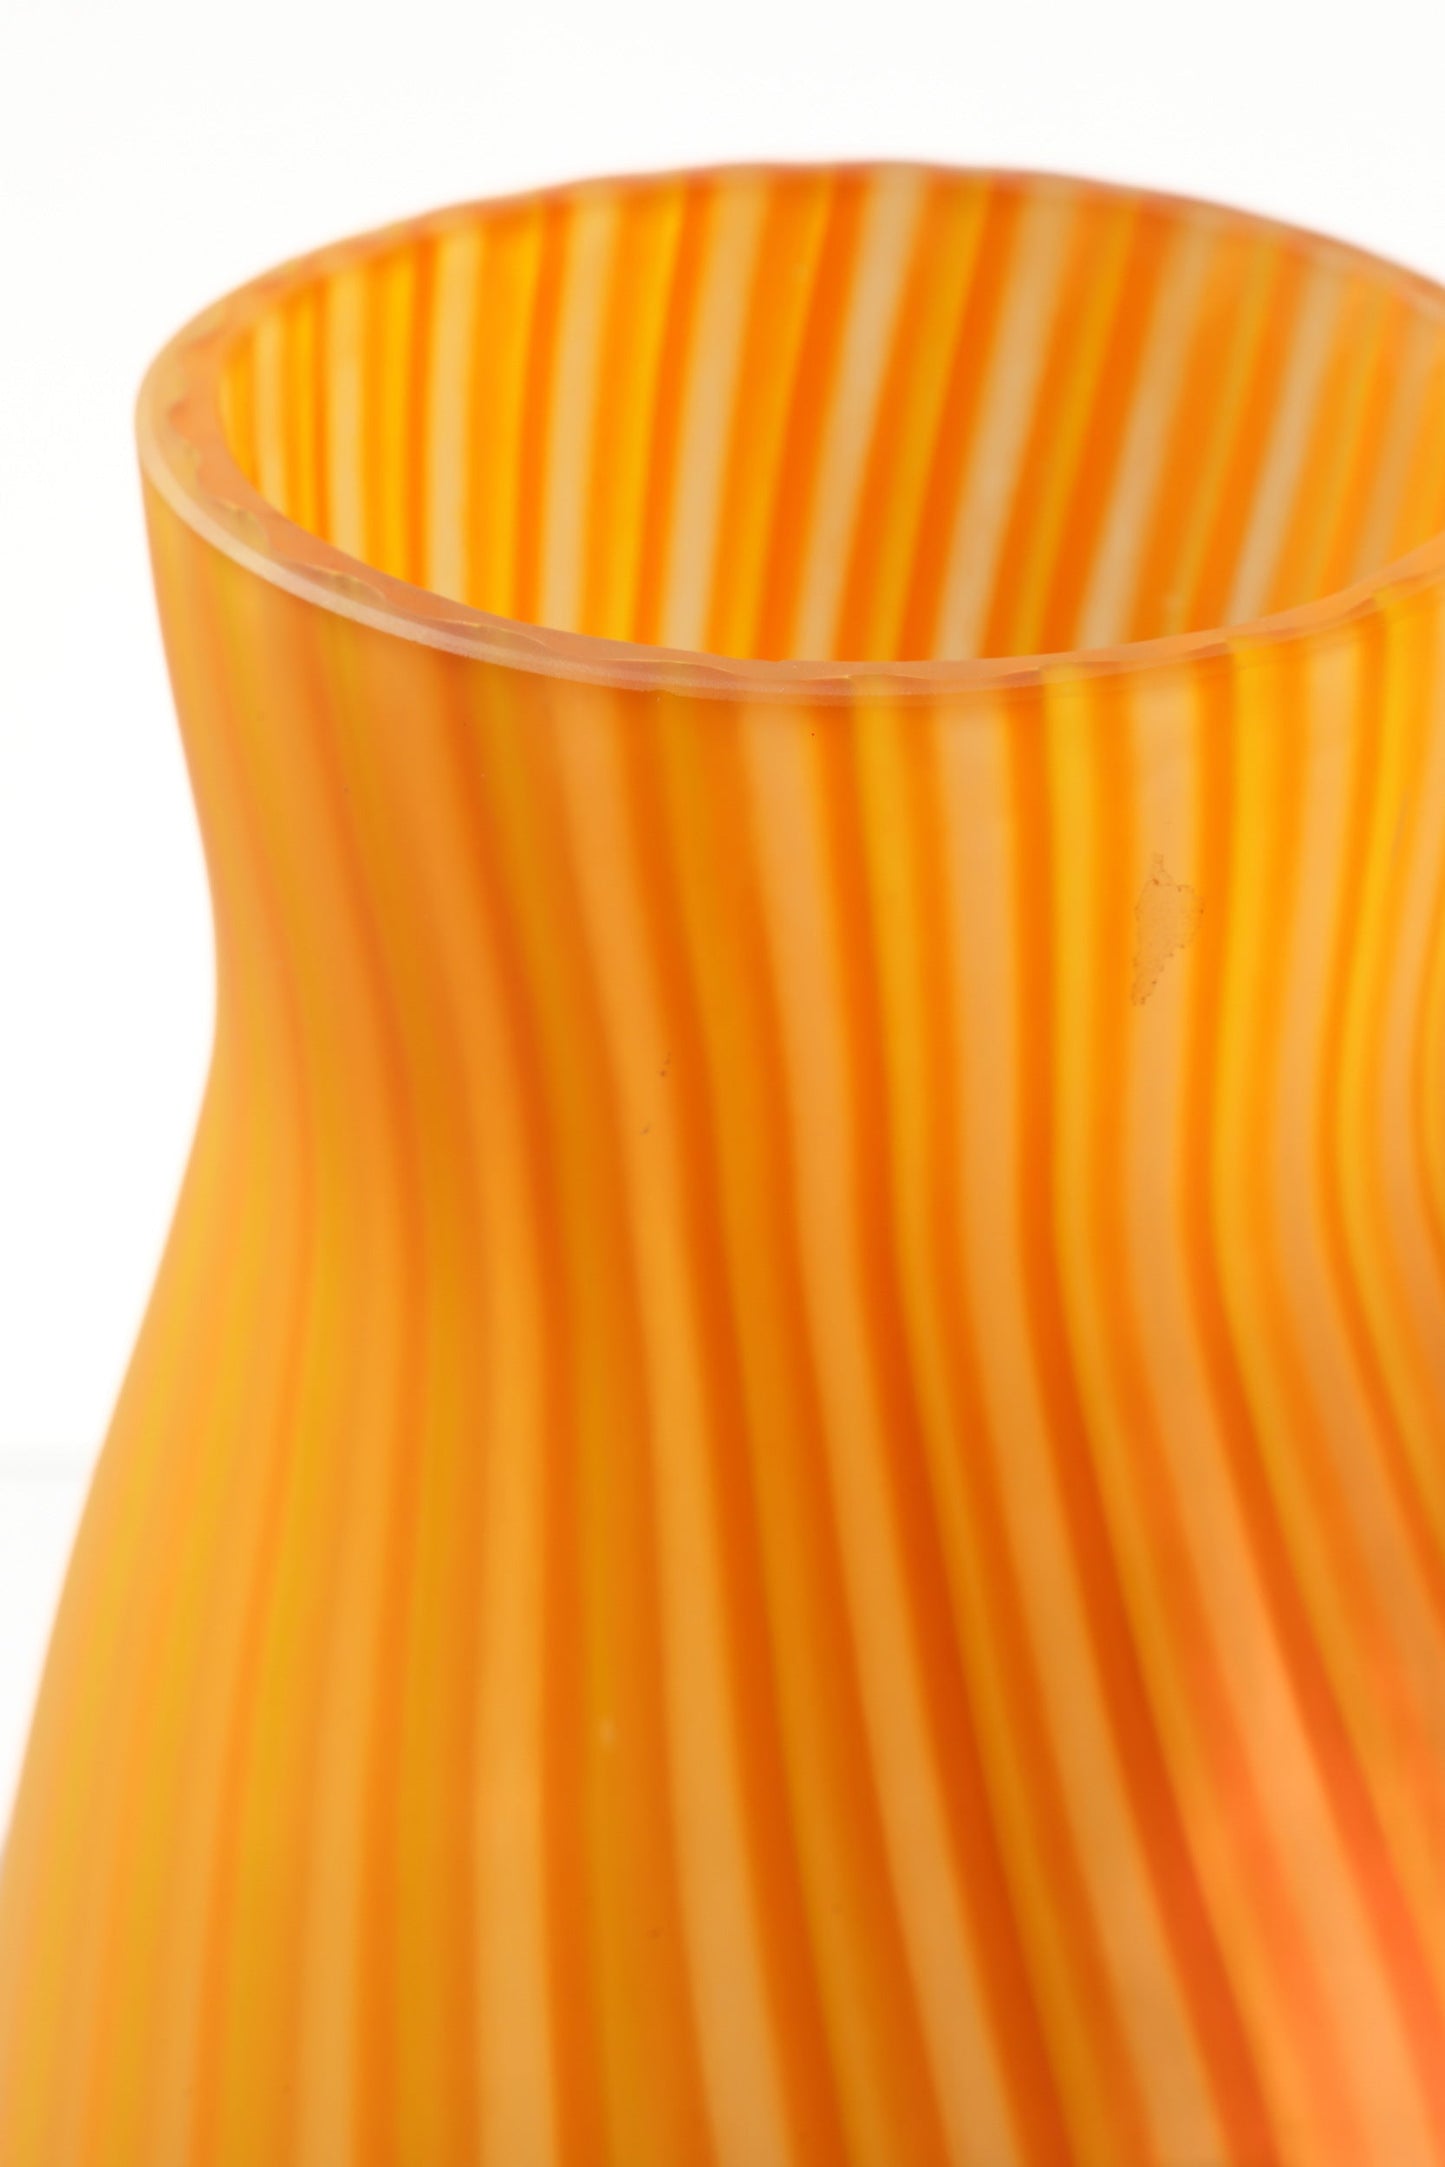 Orange Murano glass vase from the 80s